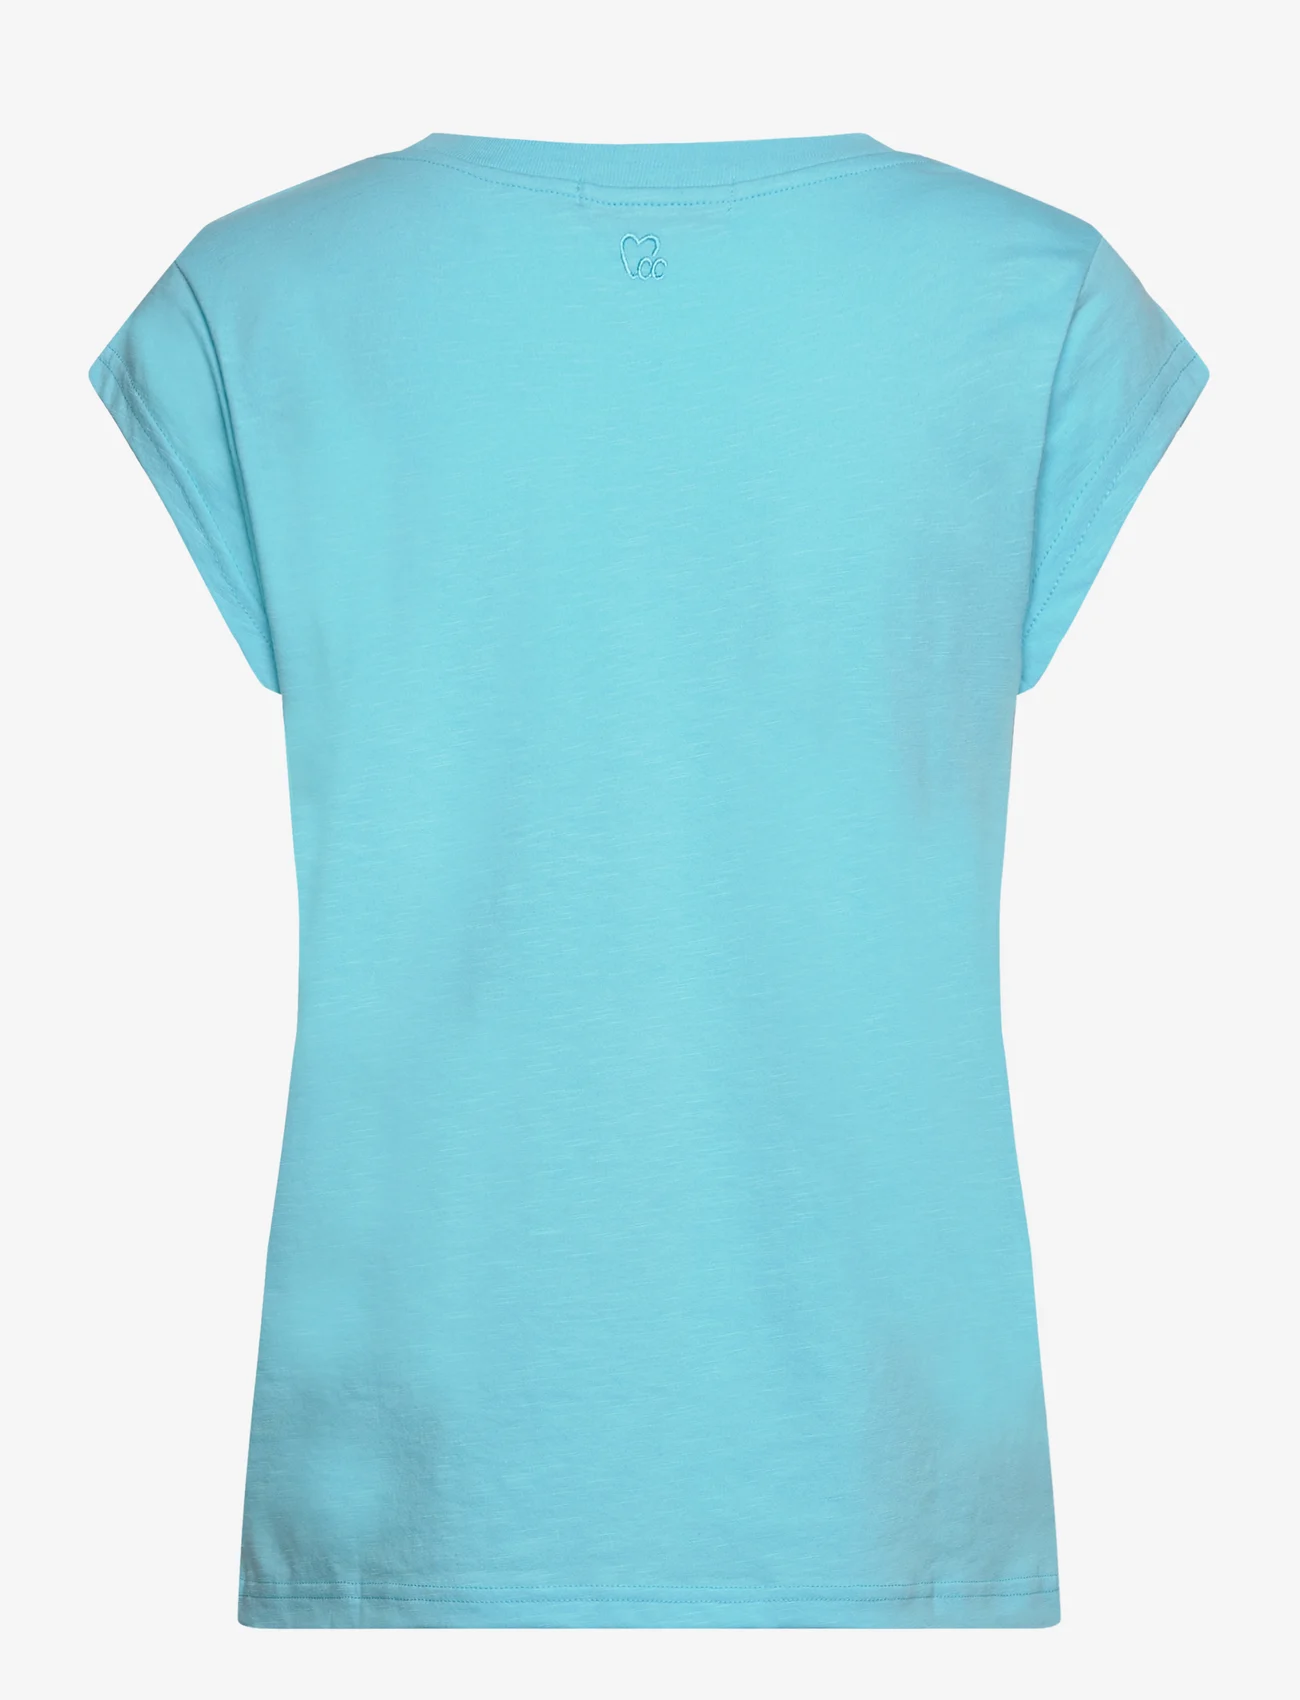 Coster Copenhagen - CC Heart basic t-shirt - lowest prices - aqua blue - 1